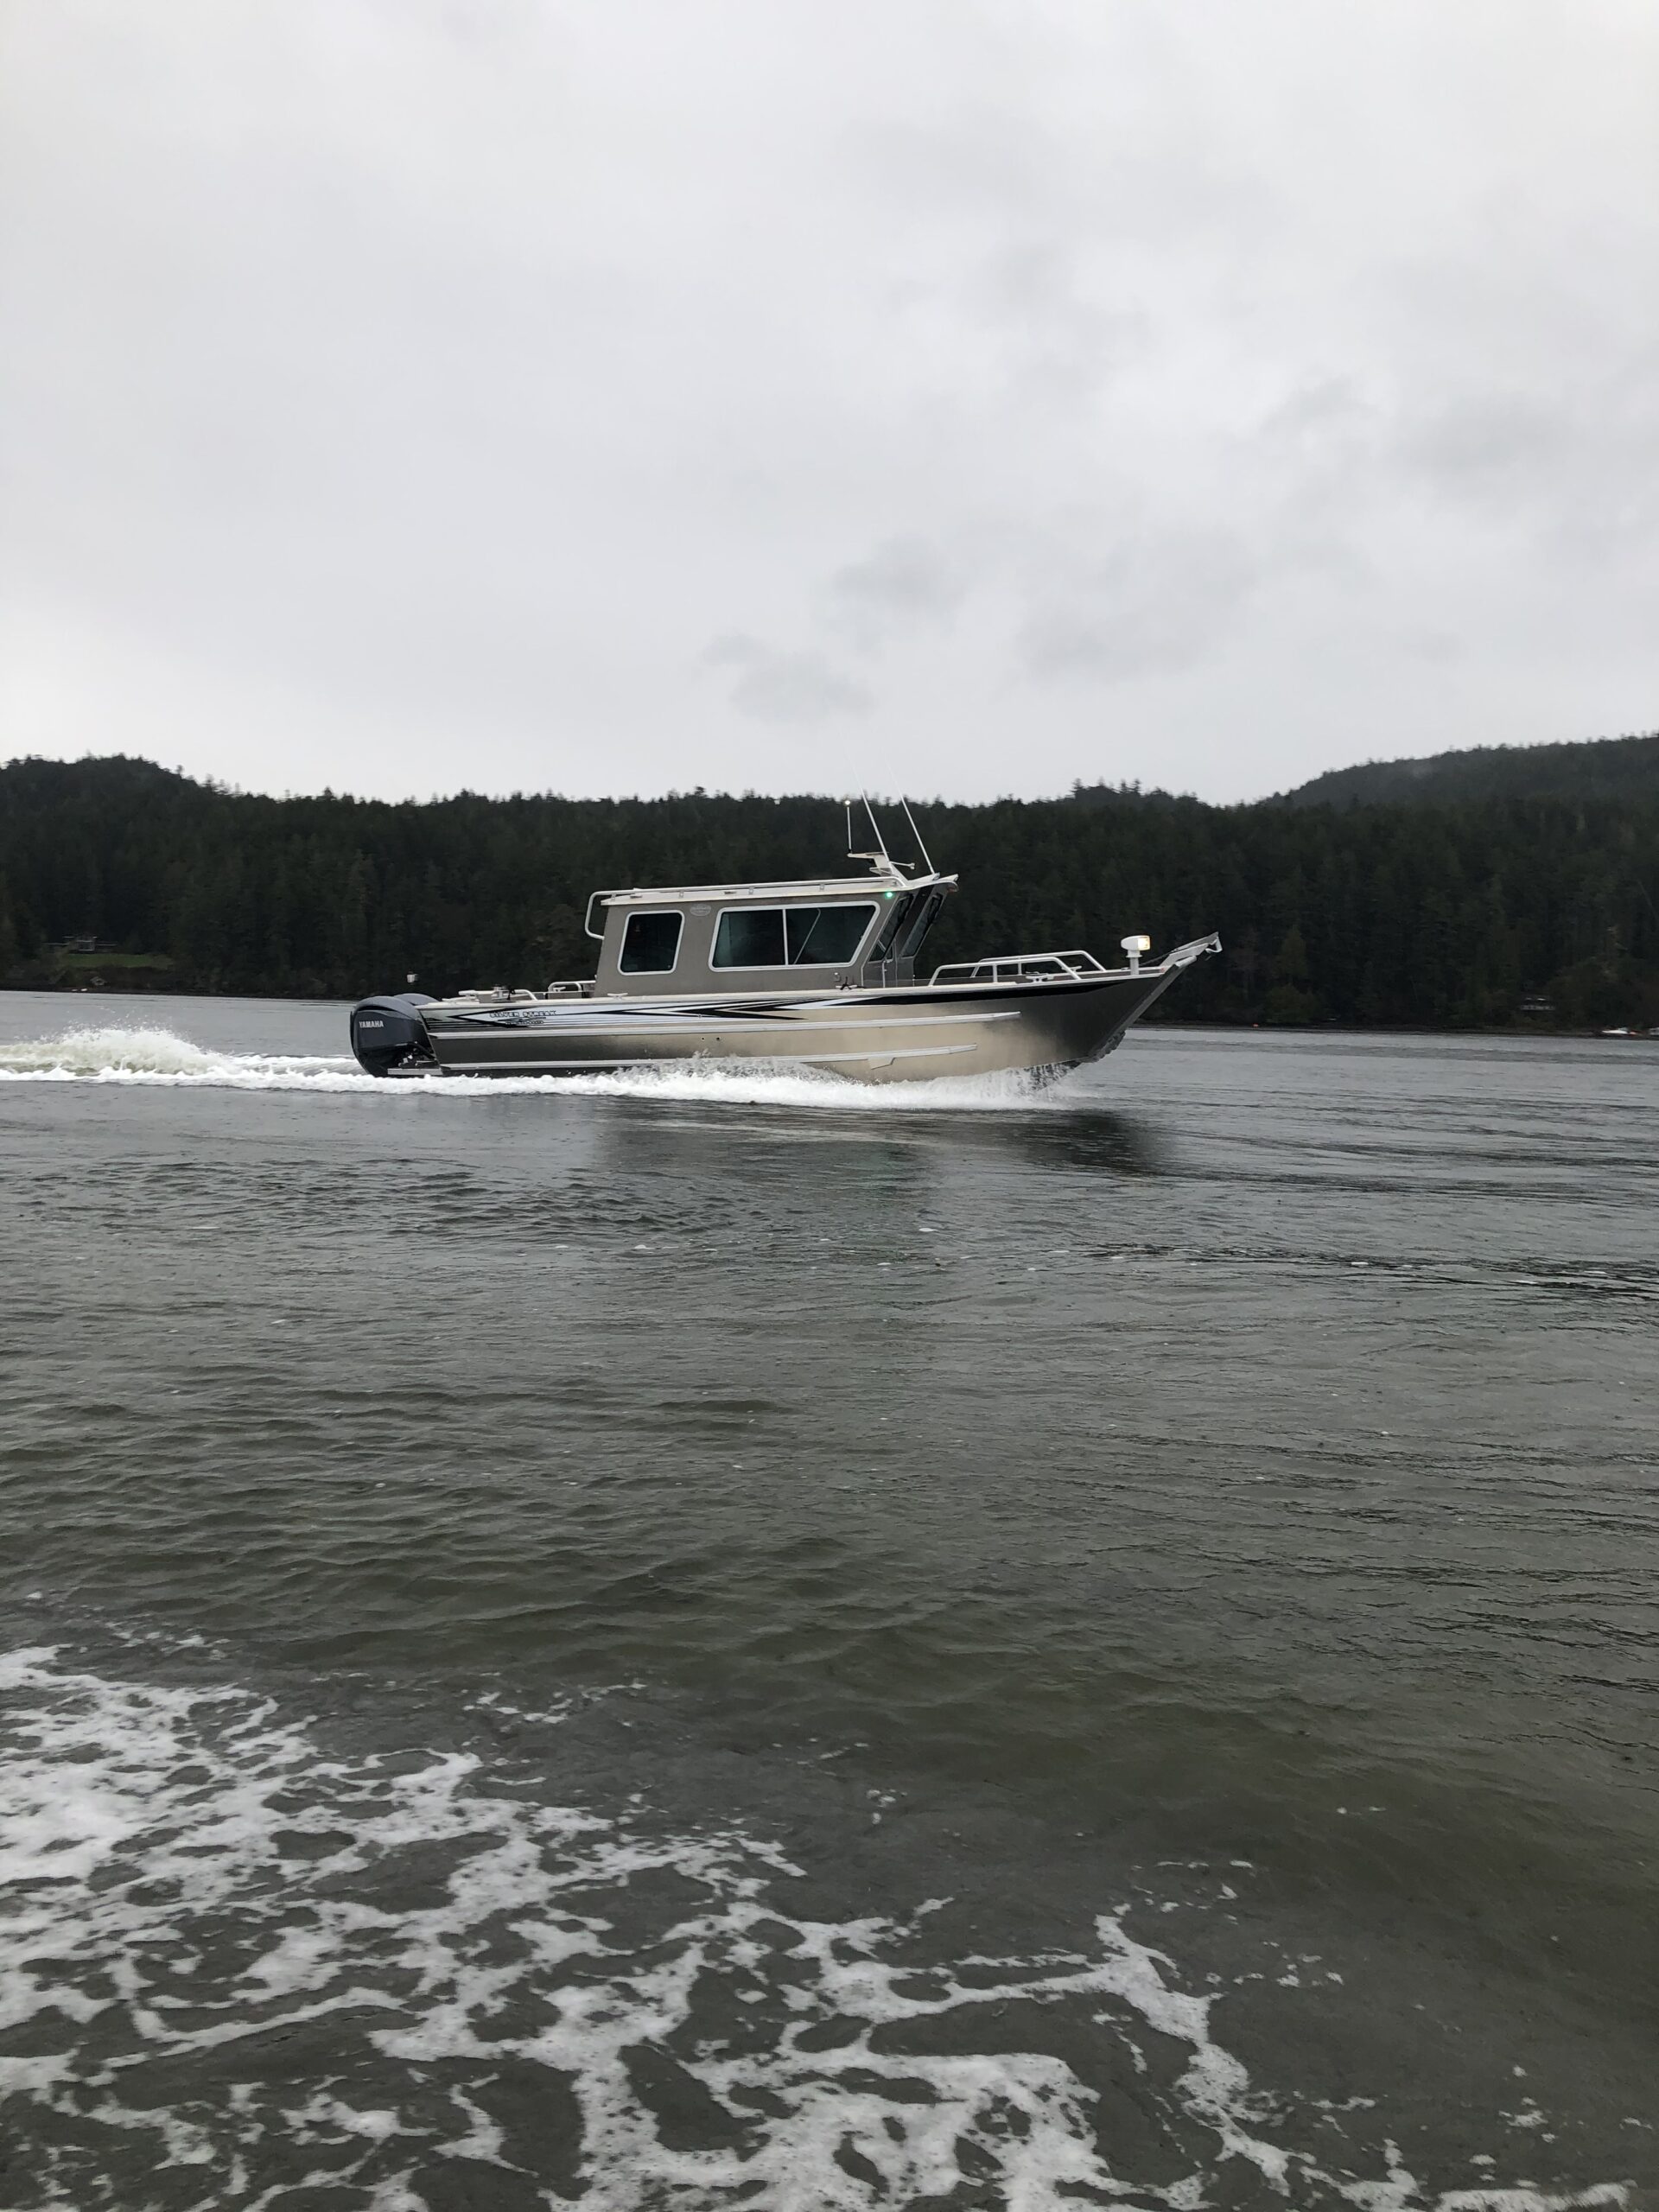 30' Sitka Landing Craft Cabin Aluminum Boat by Silver Streak Boats